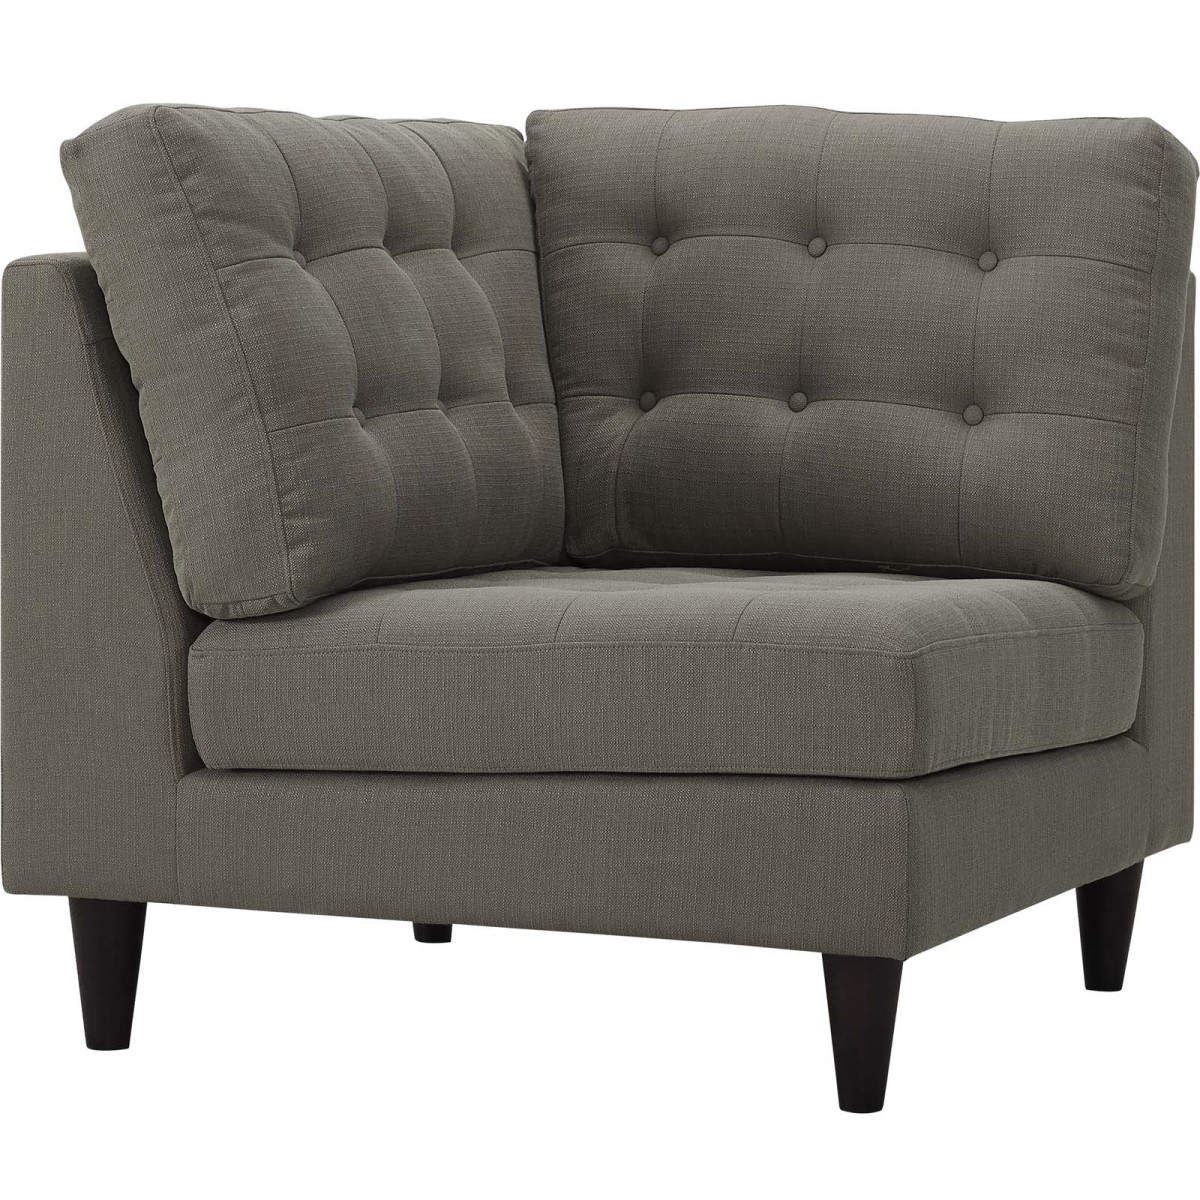 Modway Eei-2610-gra 35.5 H X 36 W X 36 L In. Empress Upholstered Fabric Corner Sofa, Gray